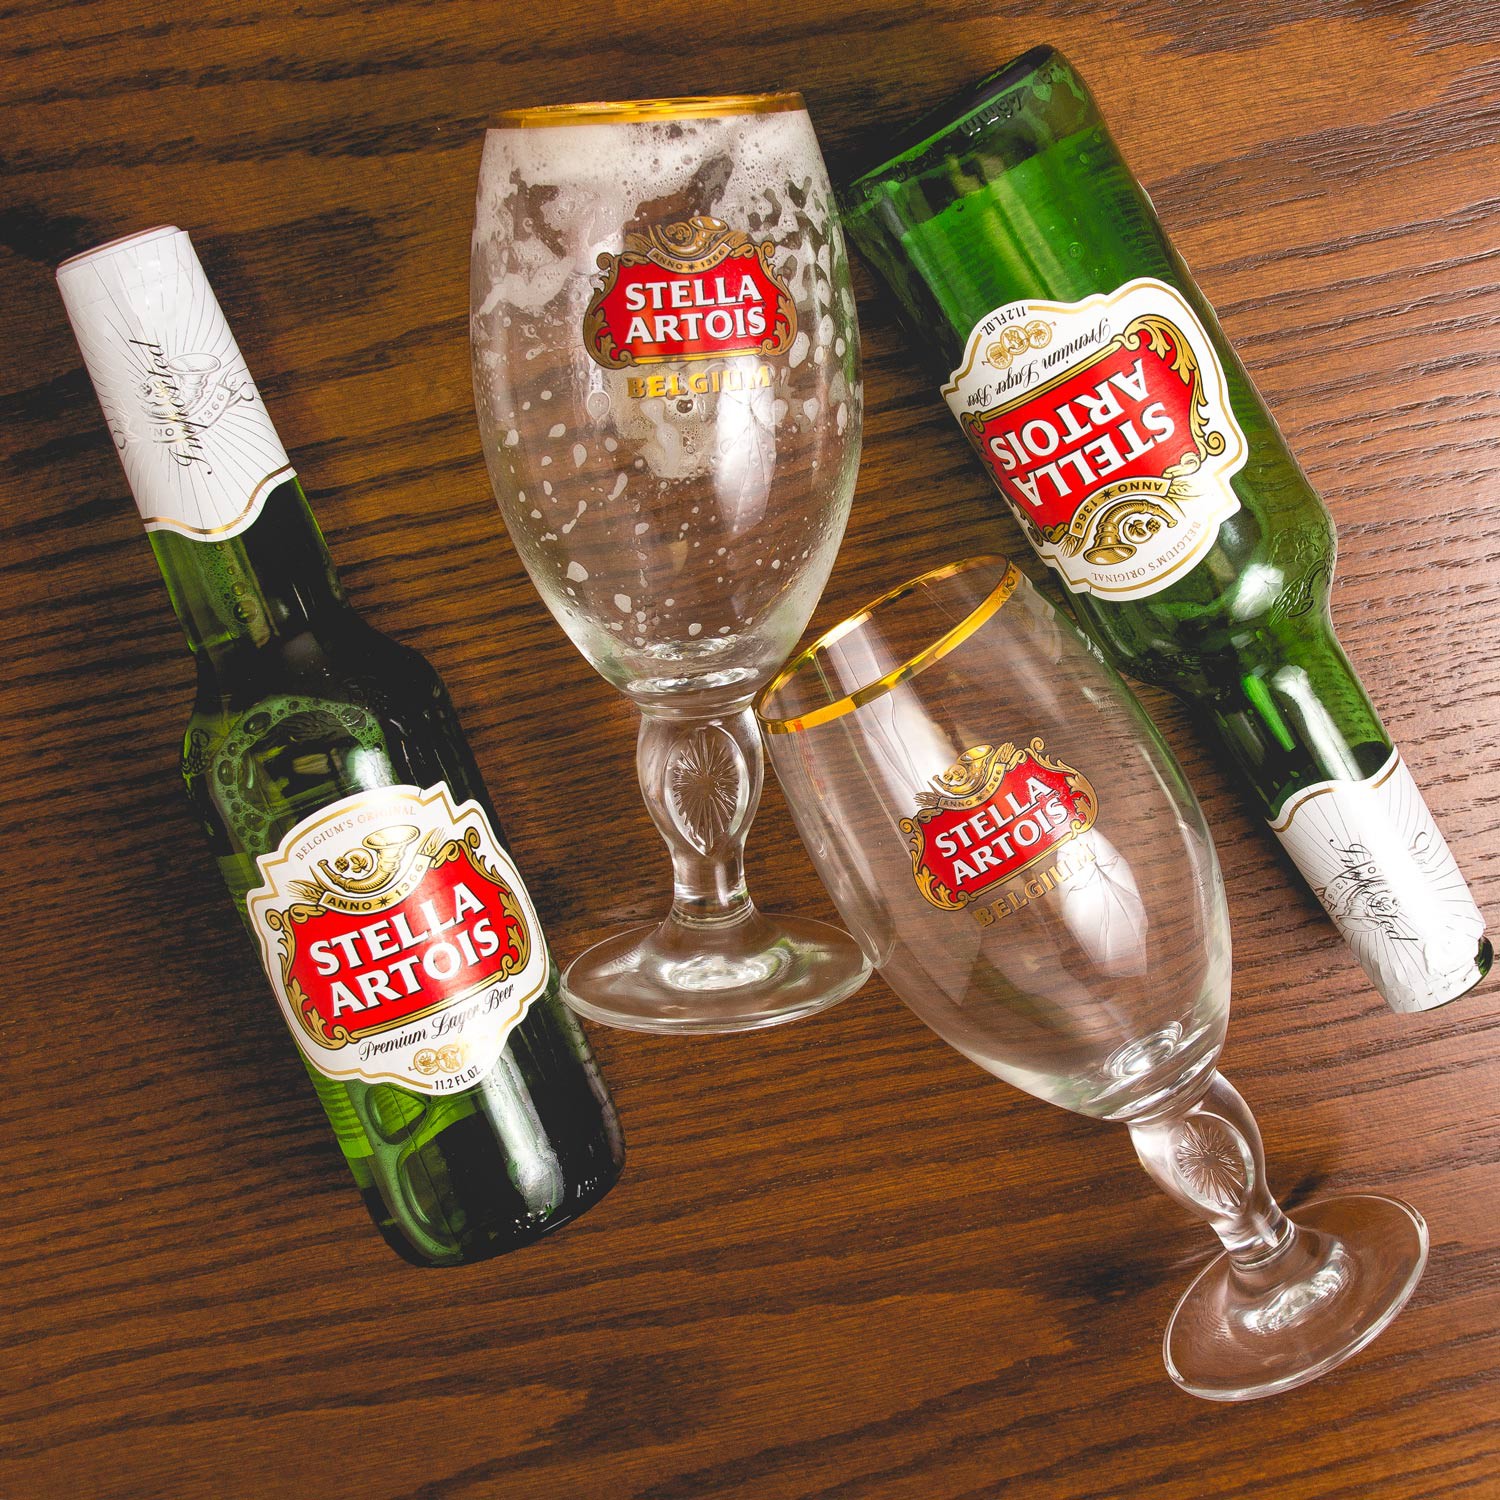 Bia Stella Artois 5% - chai 330ml (Bỉ)